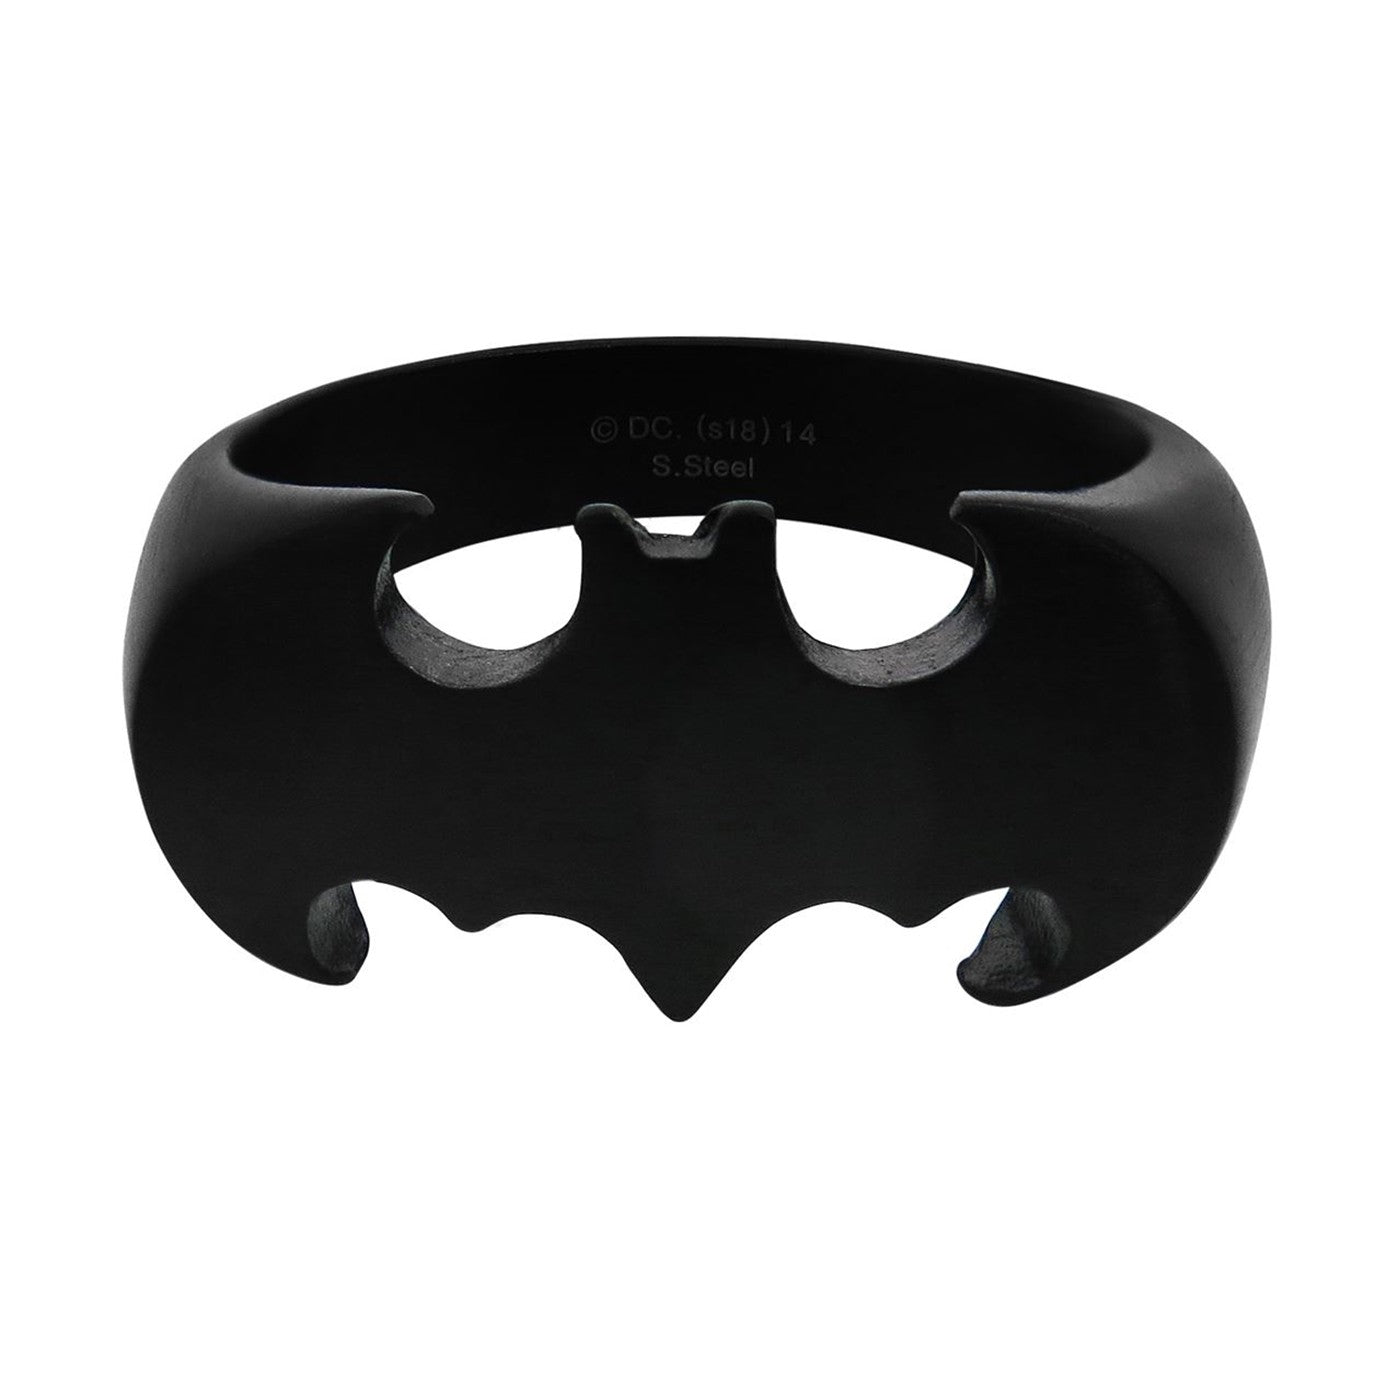 Stainless steel matte black ring with Batman symbol.